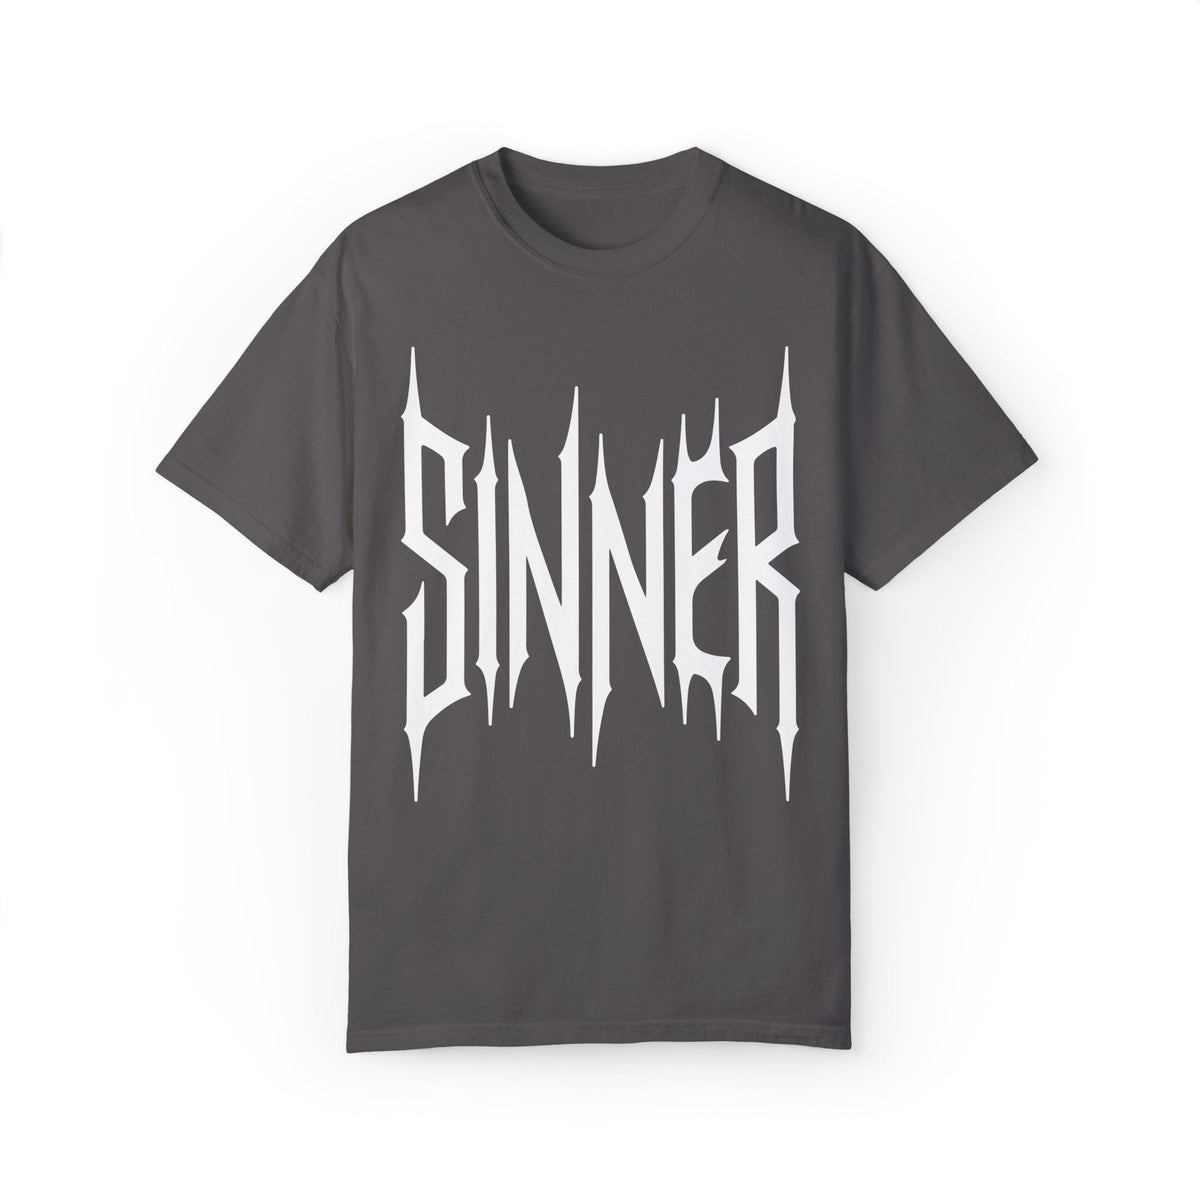 Sinner Oversized Beefy Tee - Goth Cloth Co.T - Shirt13134492587009995295